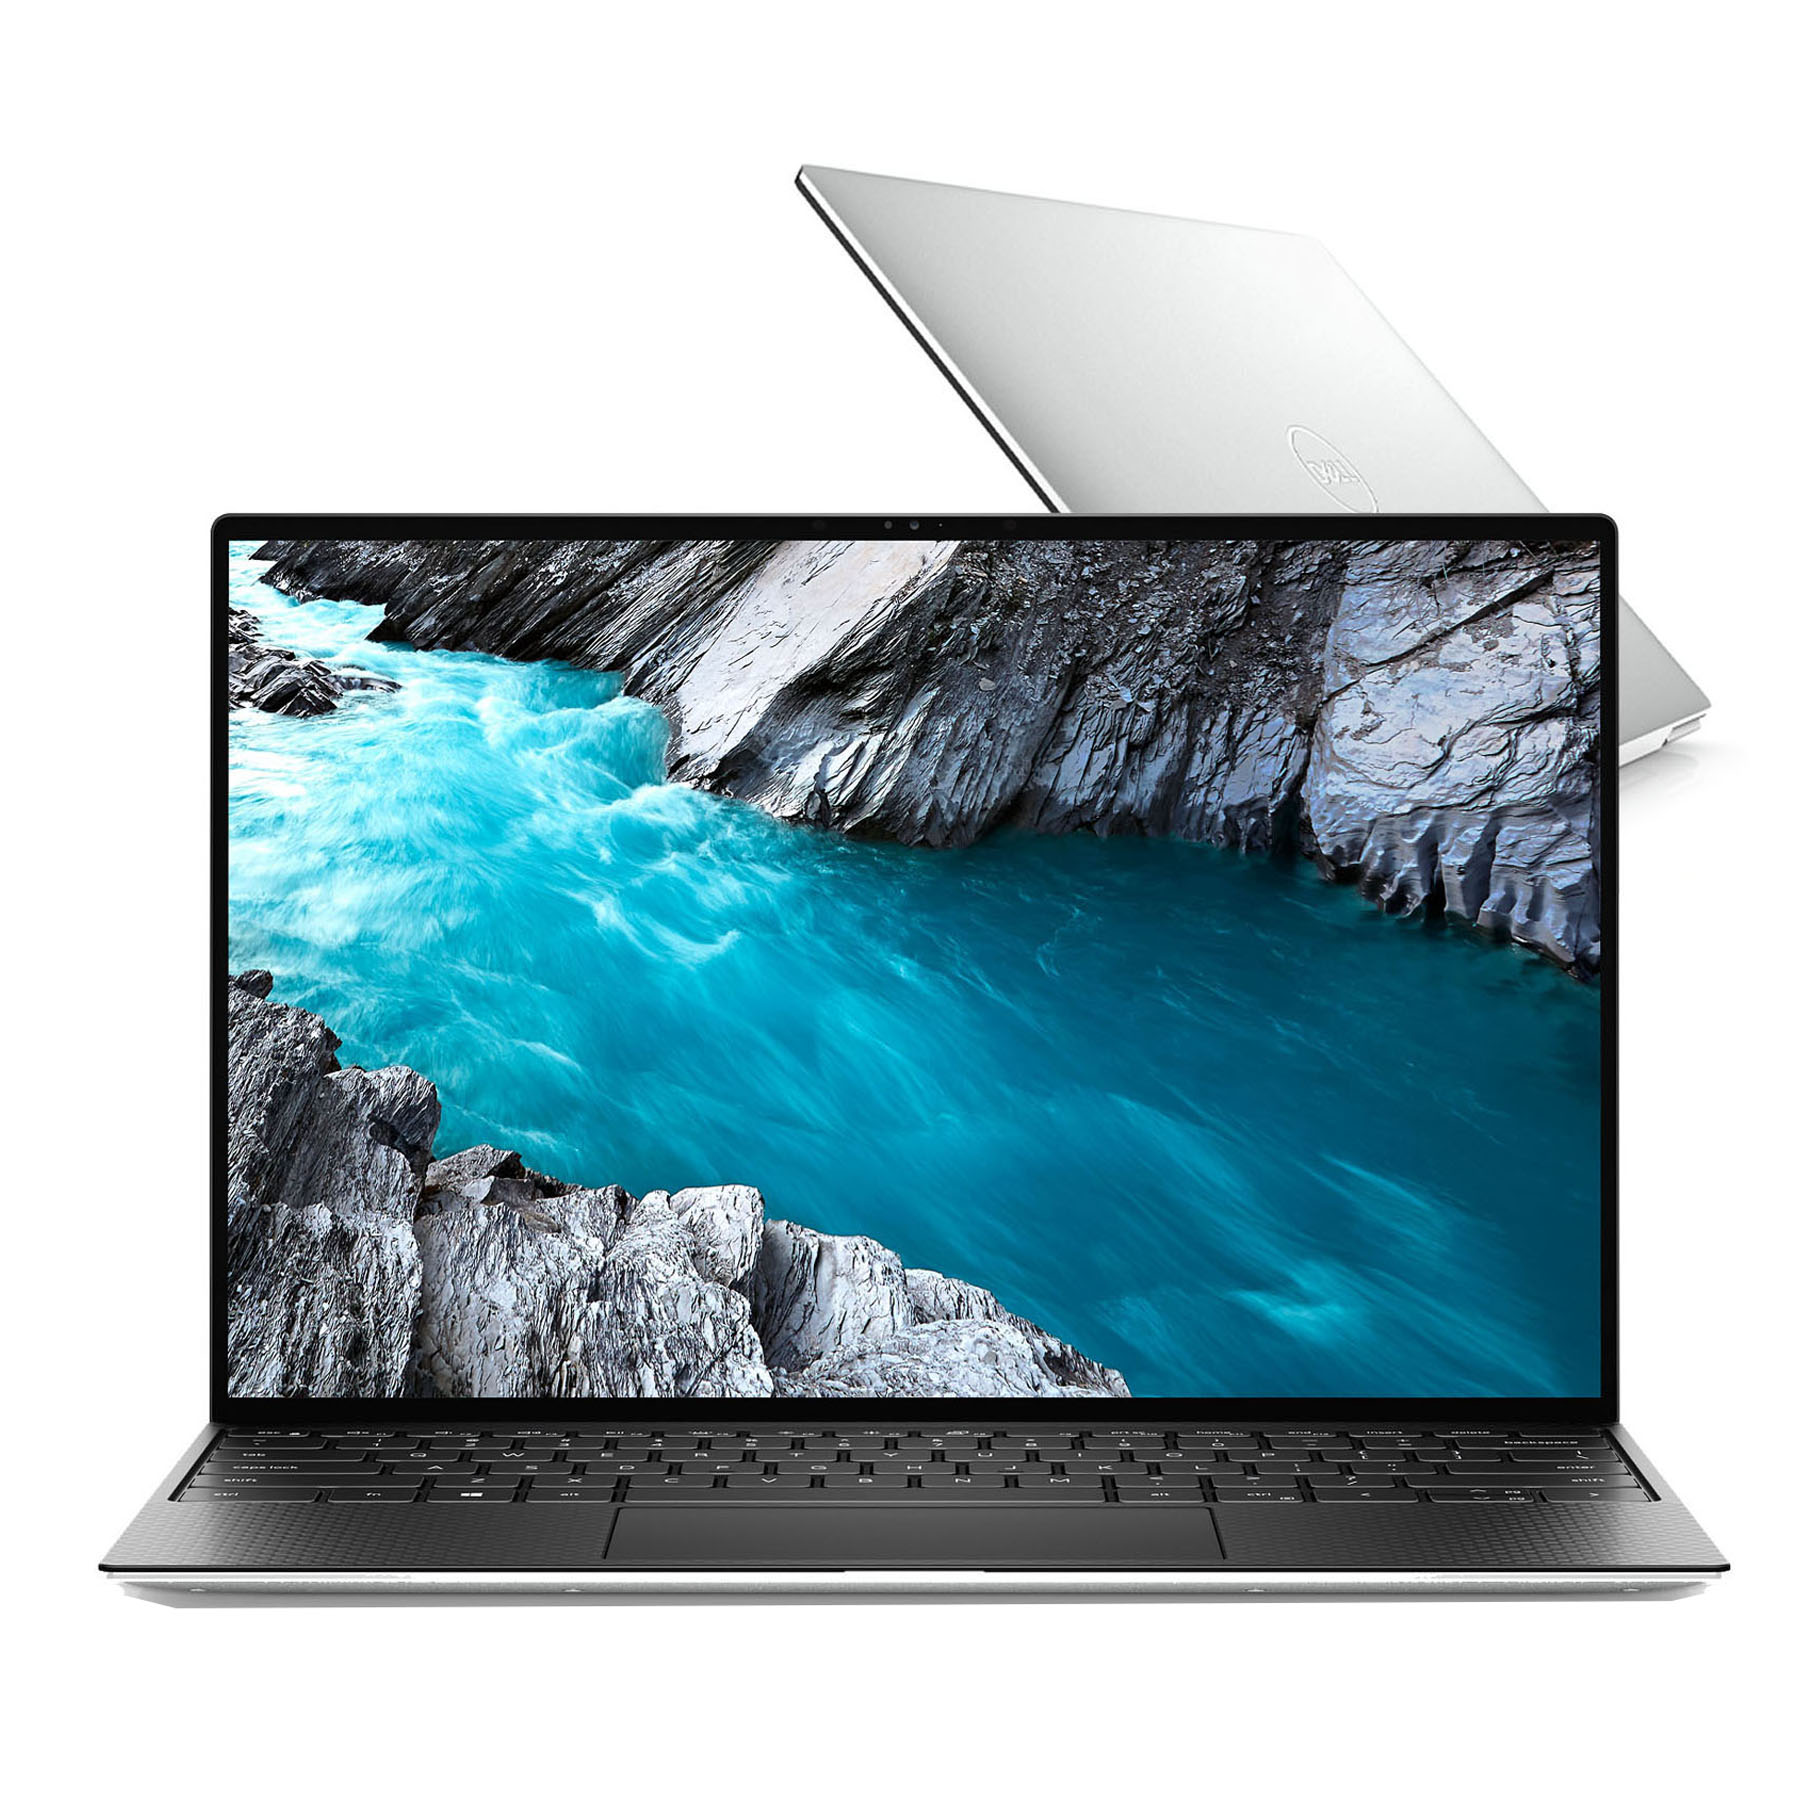 [Mới 99%] Laptop Dell XPS 13 9370 (Core i7-8550U, 16GB, 512GB, intel UHD Graphics 620, 13.3 inch 4K Cảm Ứng)